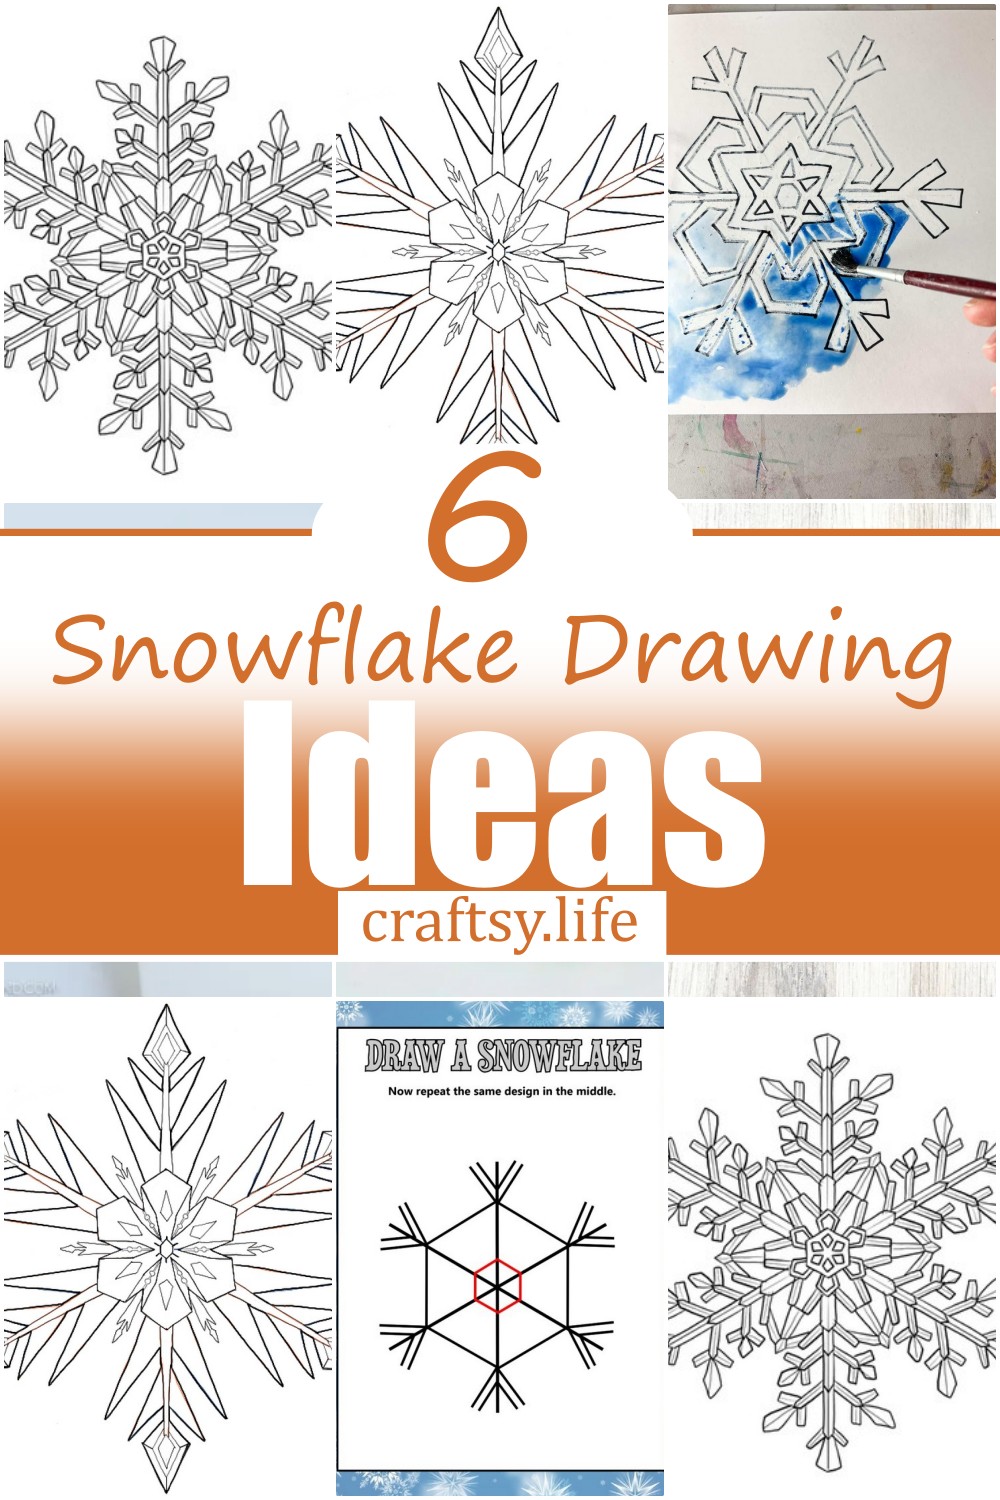 6 Snowflake Drawing Ideas